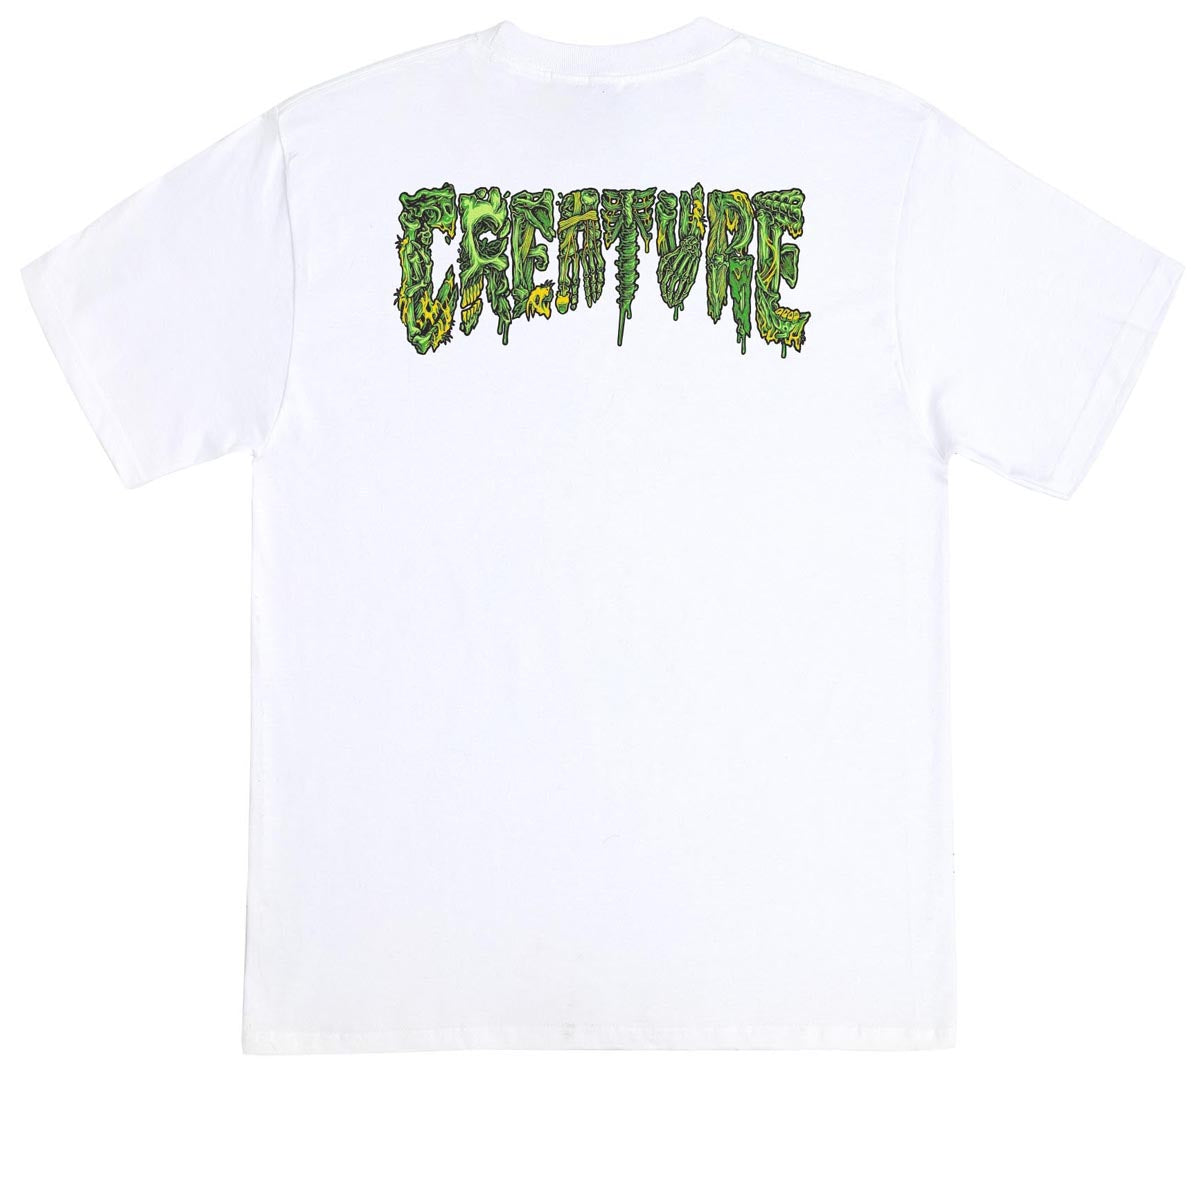 Creature Catacomb Relic T-Shirt - White image 1